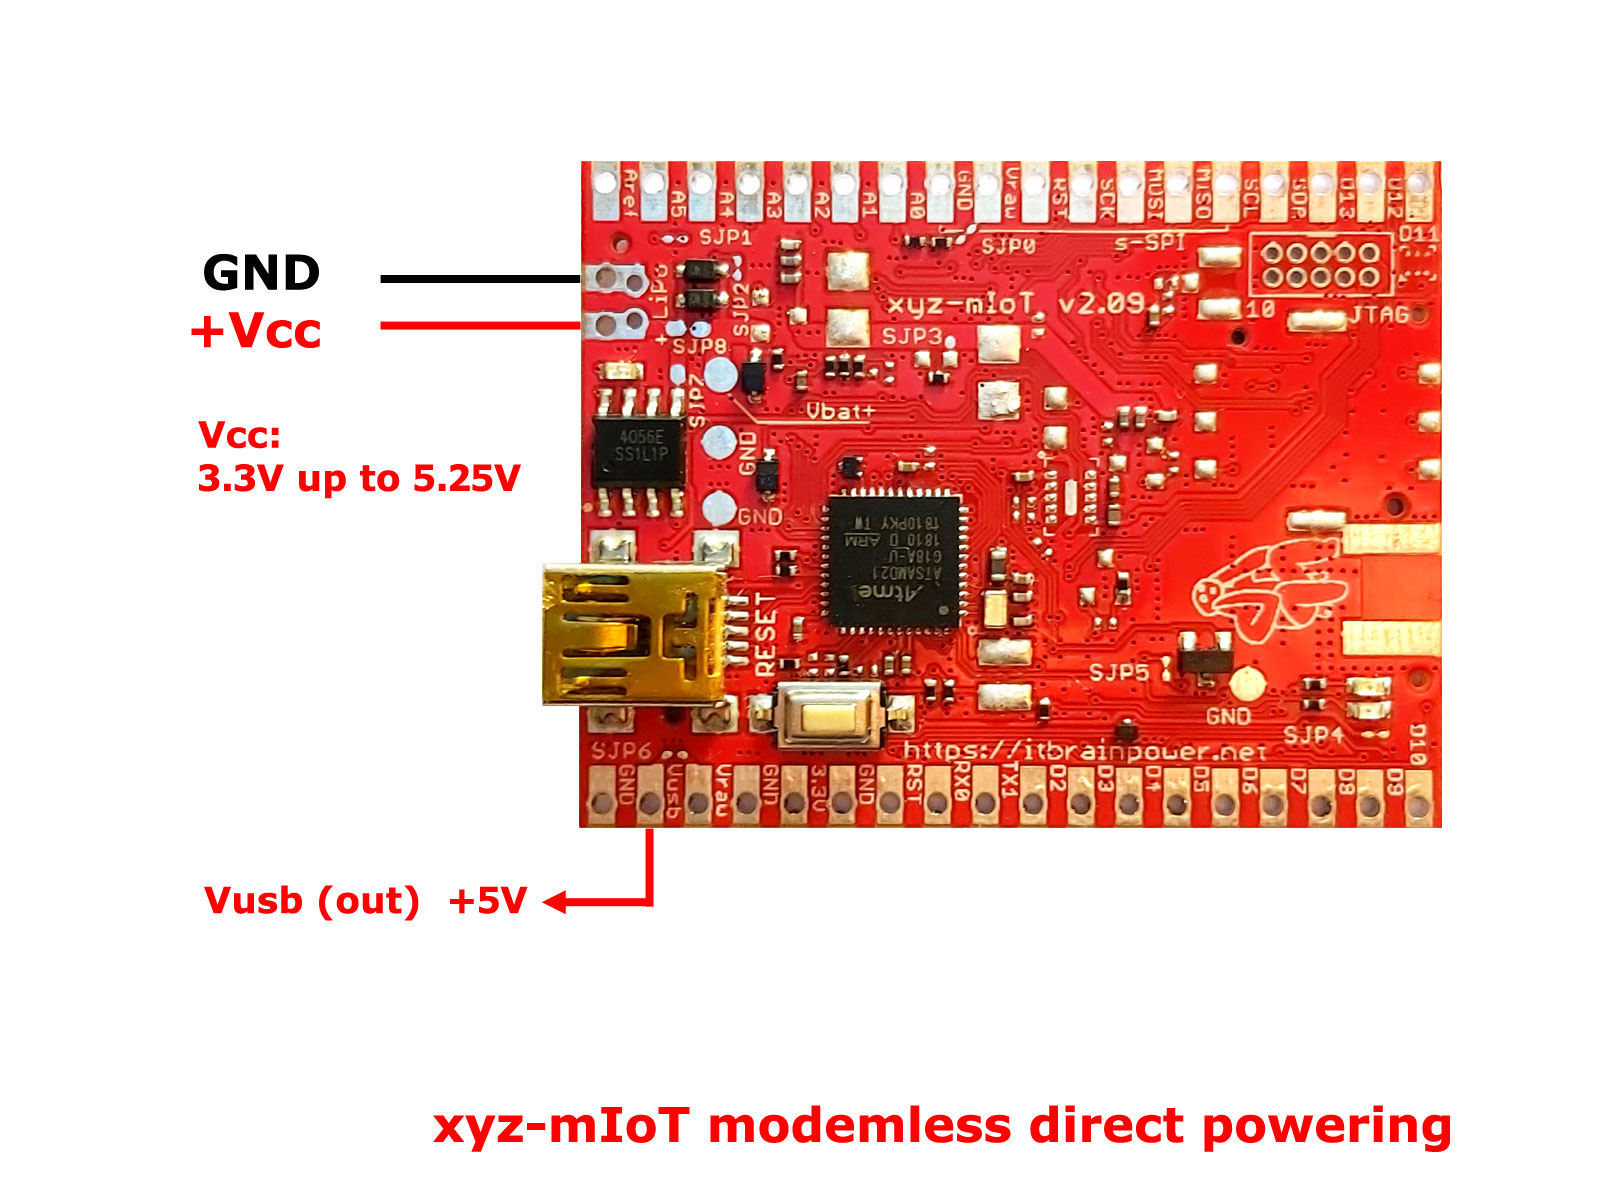 xyz-mIoT modemless version direct powering